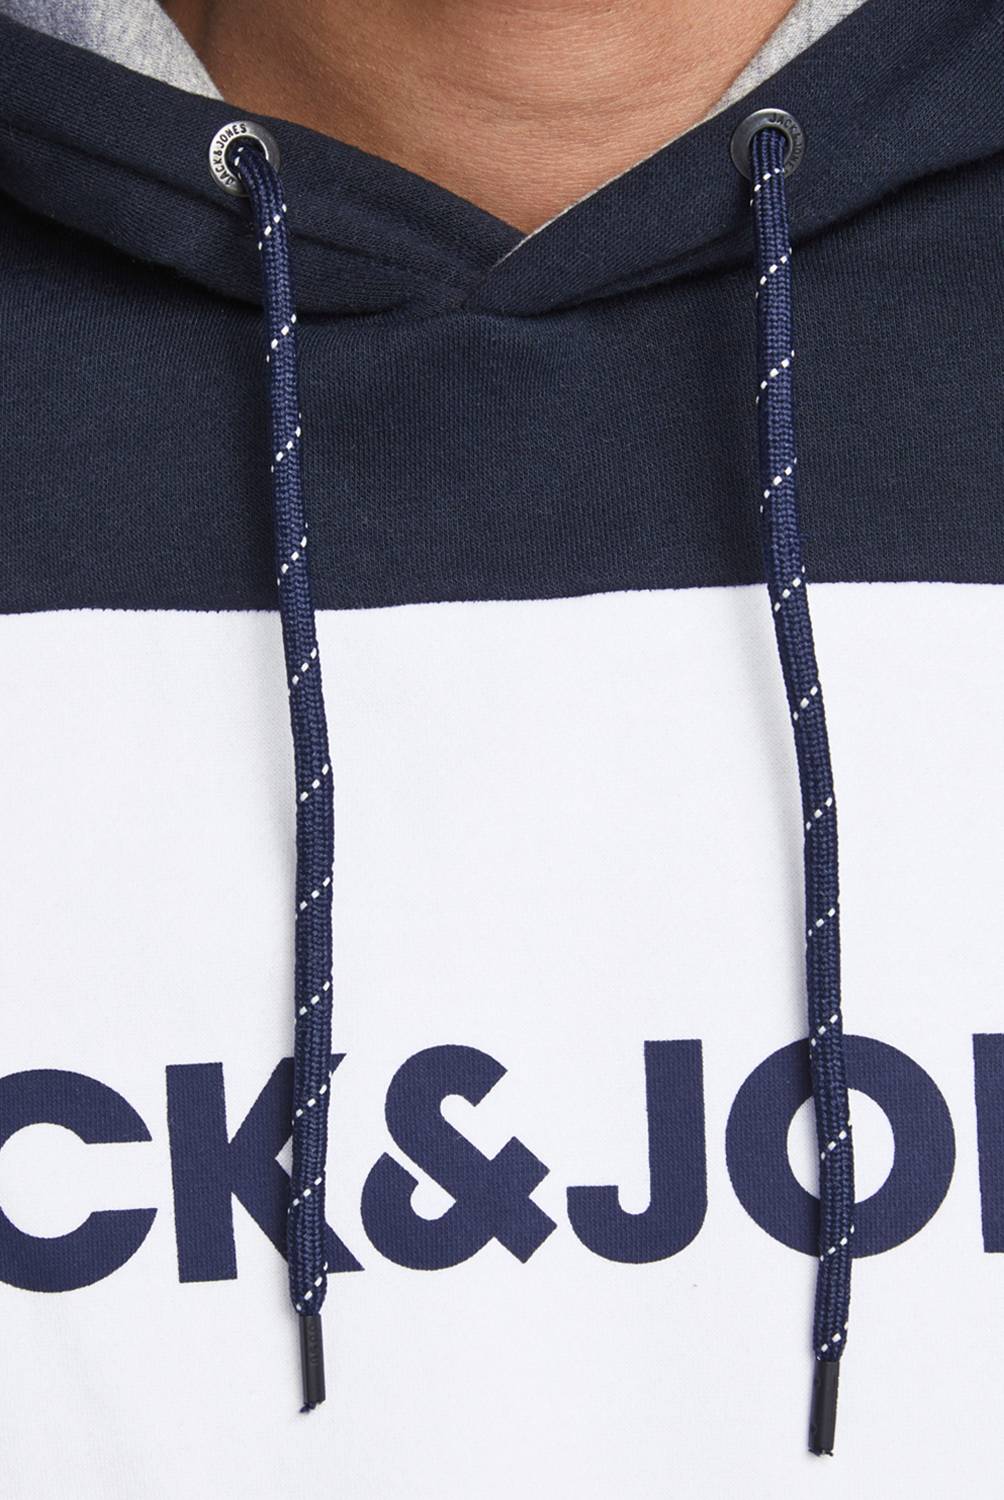 JACK&JONES - Polerón Hombre Jack&Jones